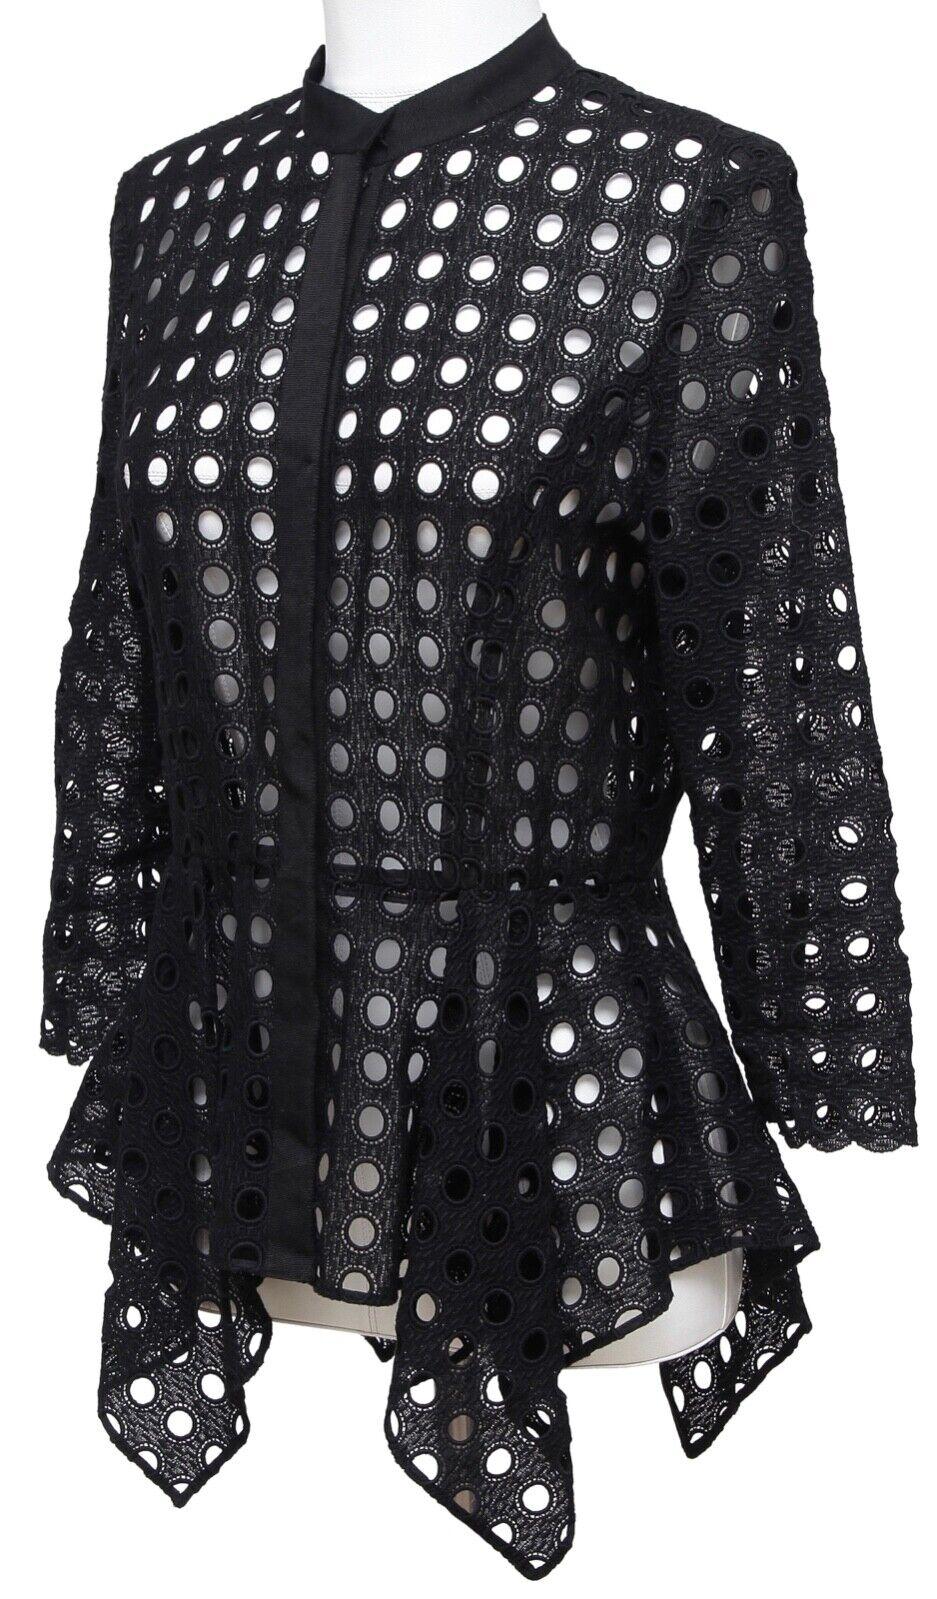 OSCAR DE LA RENTA Black Cardigan Jacket Eyelet Lace 3/4 Sleeve Sz 4 In Good Condition For Sale In Hollywood, FL